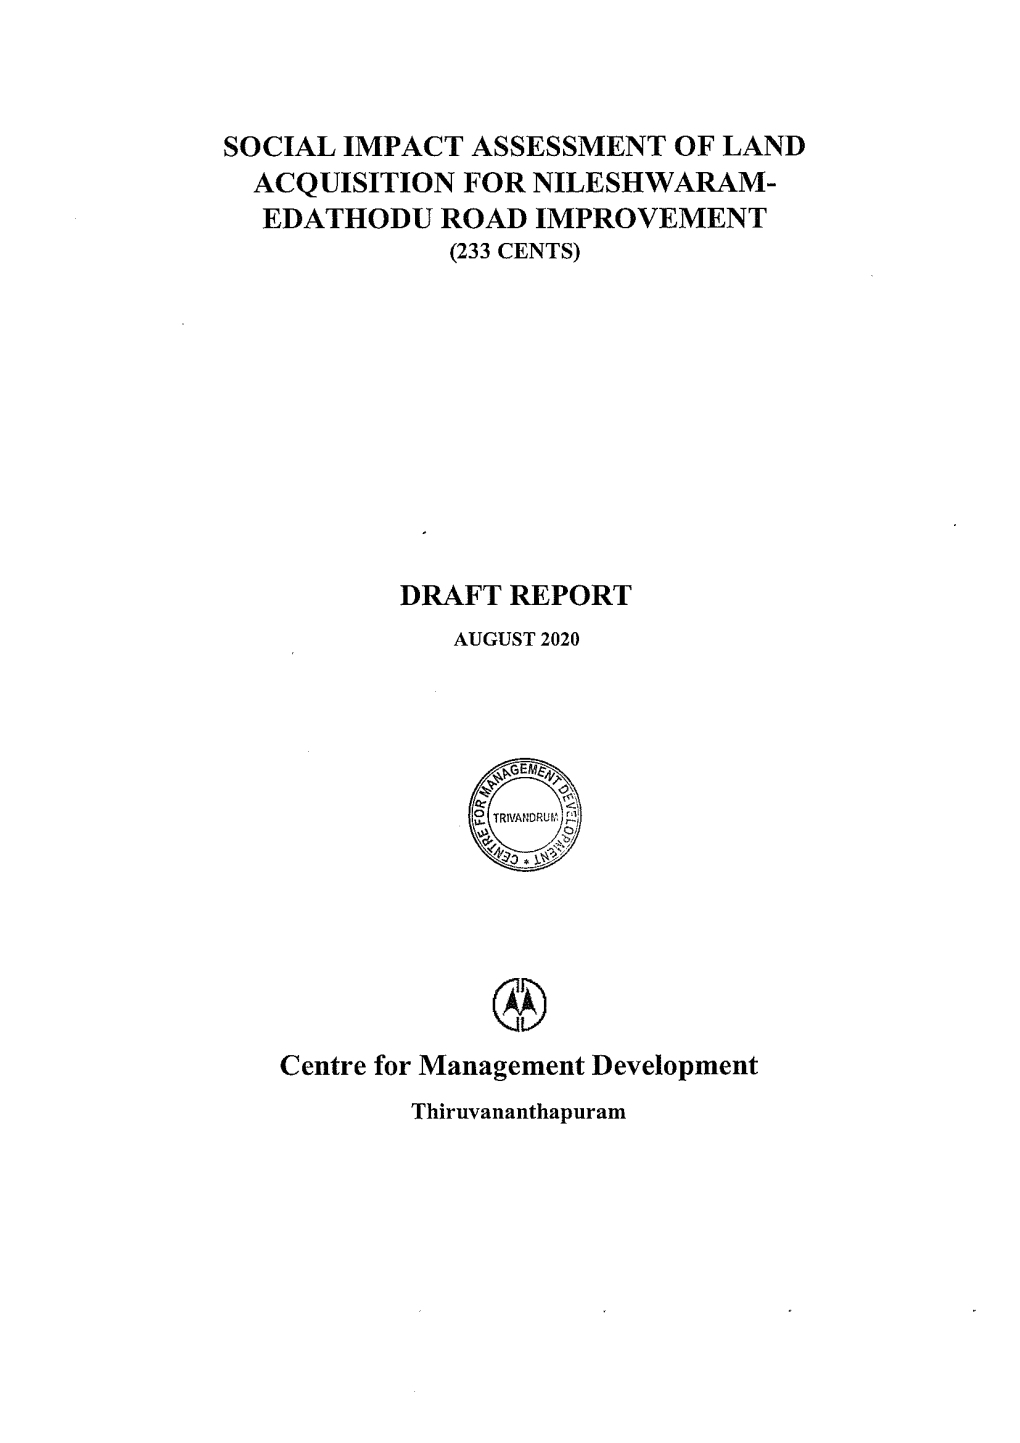 SIA-Draft Report-Nileshwaram-Edathodu